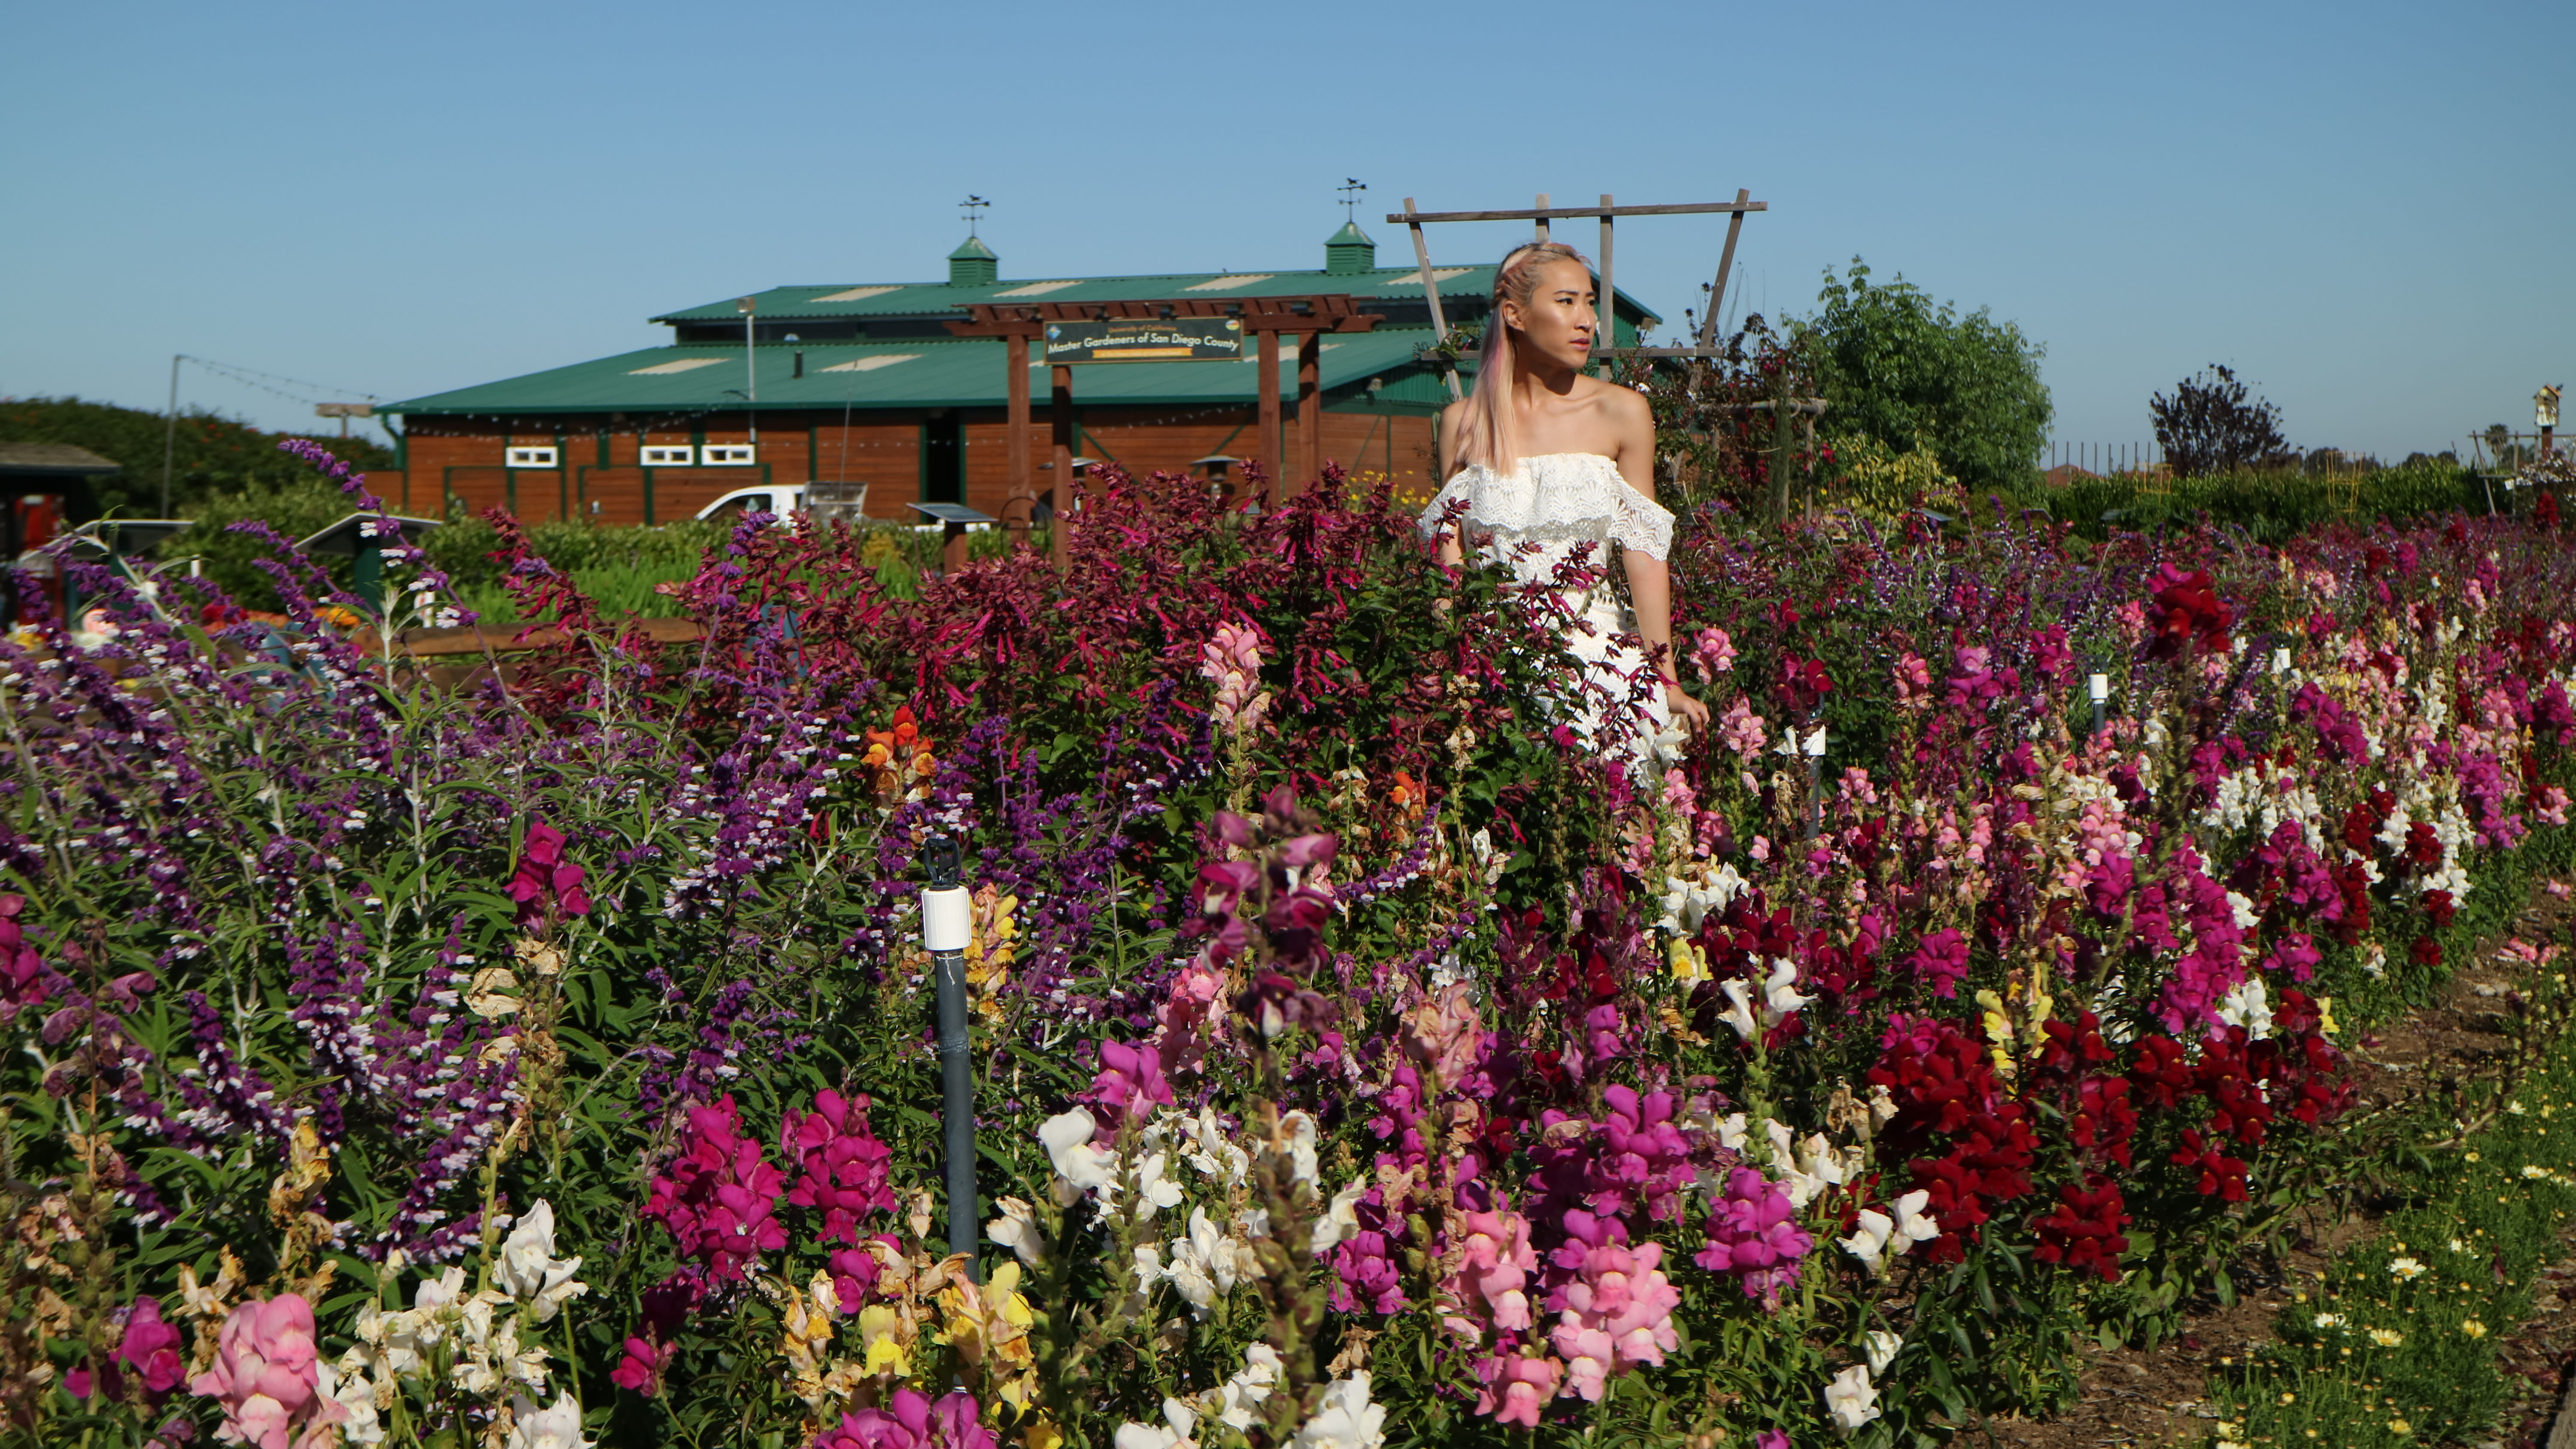 Lady standing in the Flower Fields